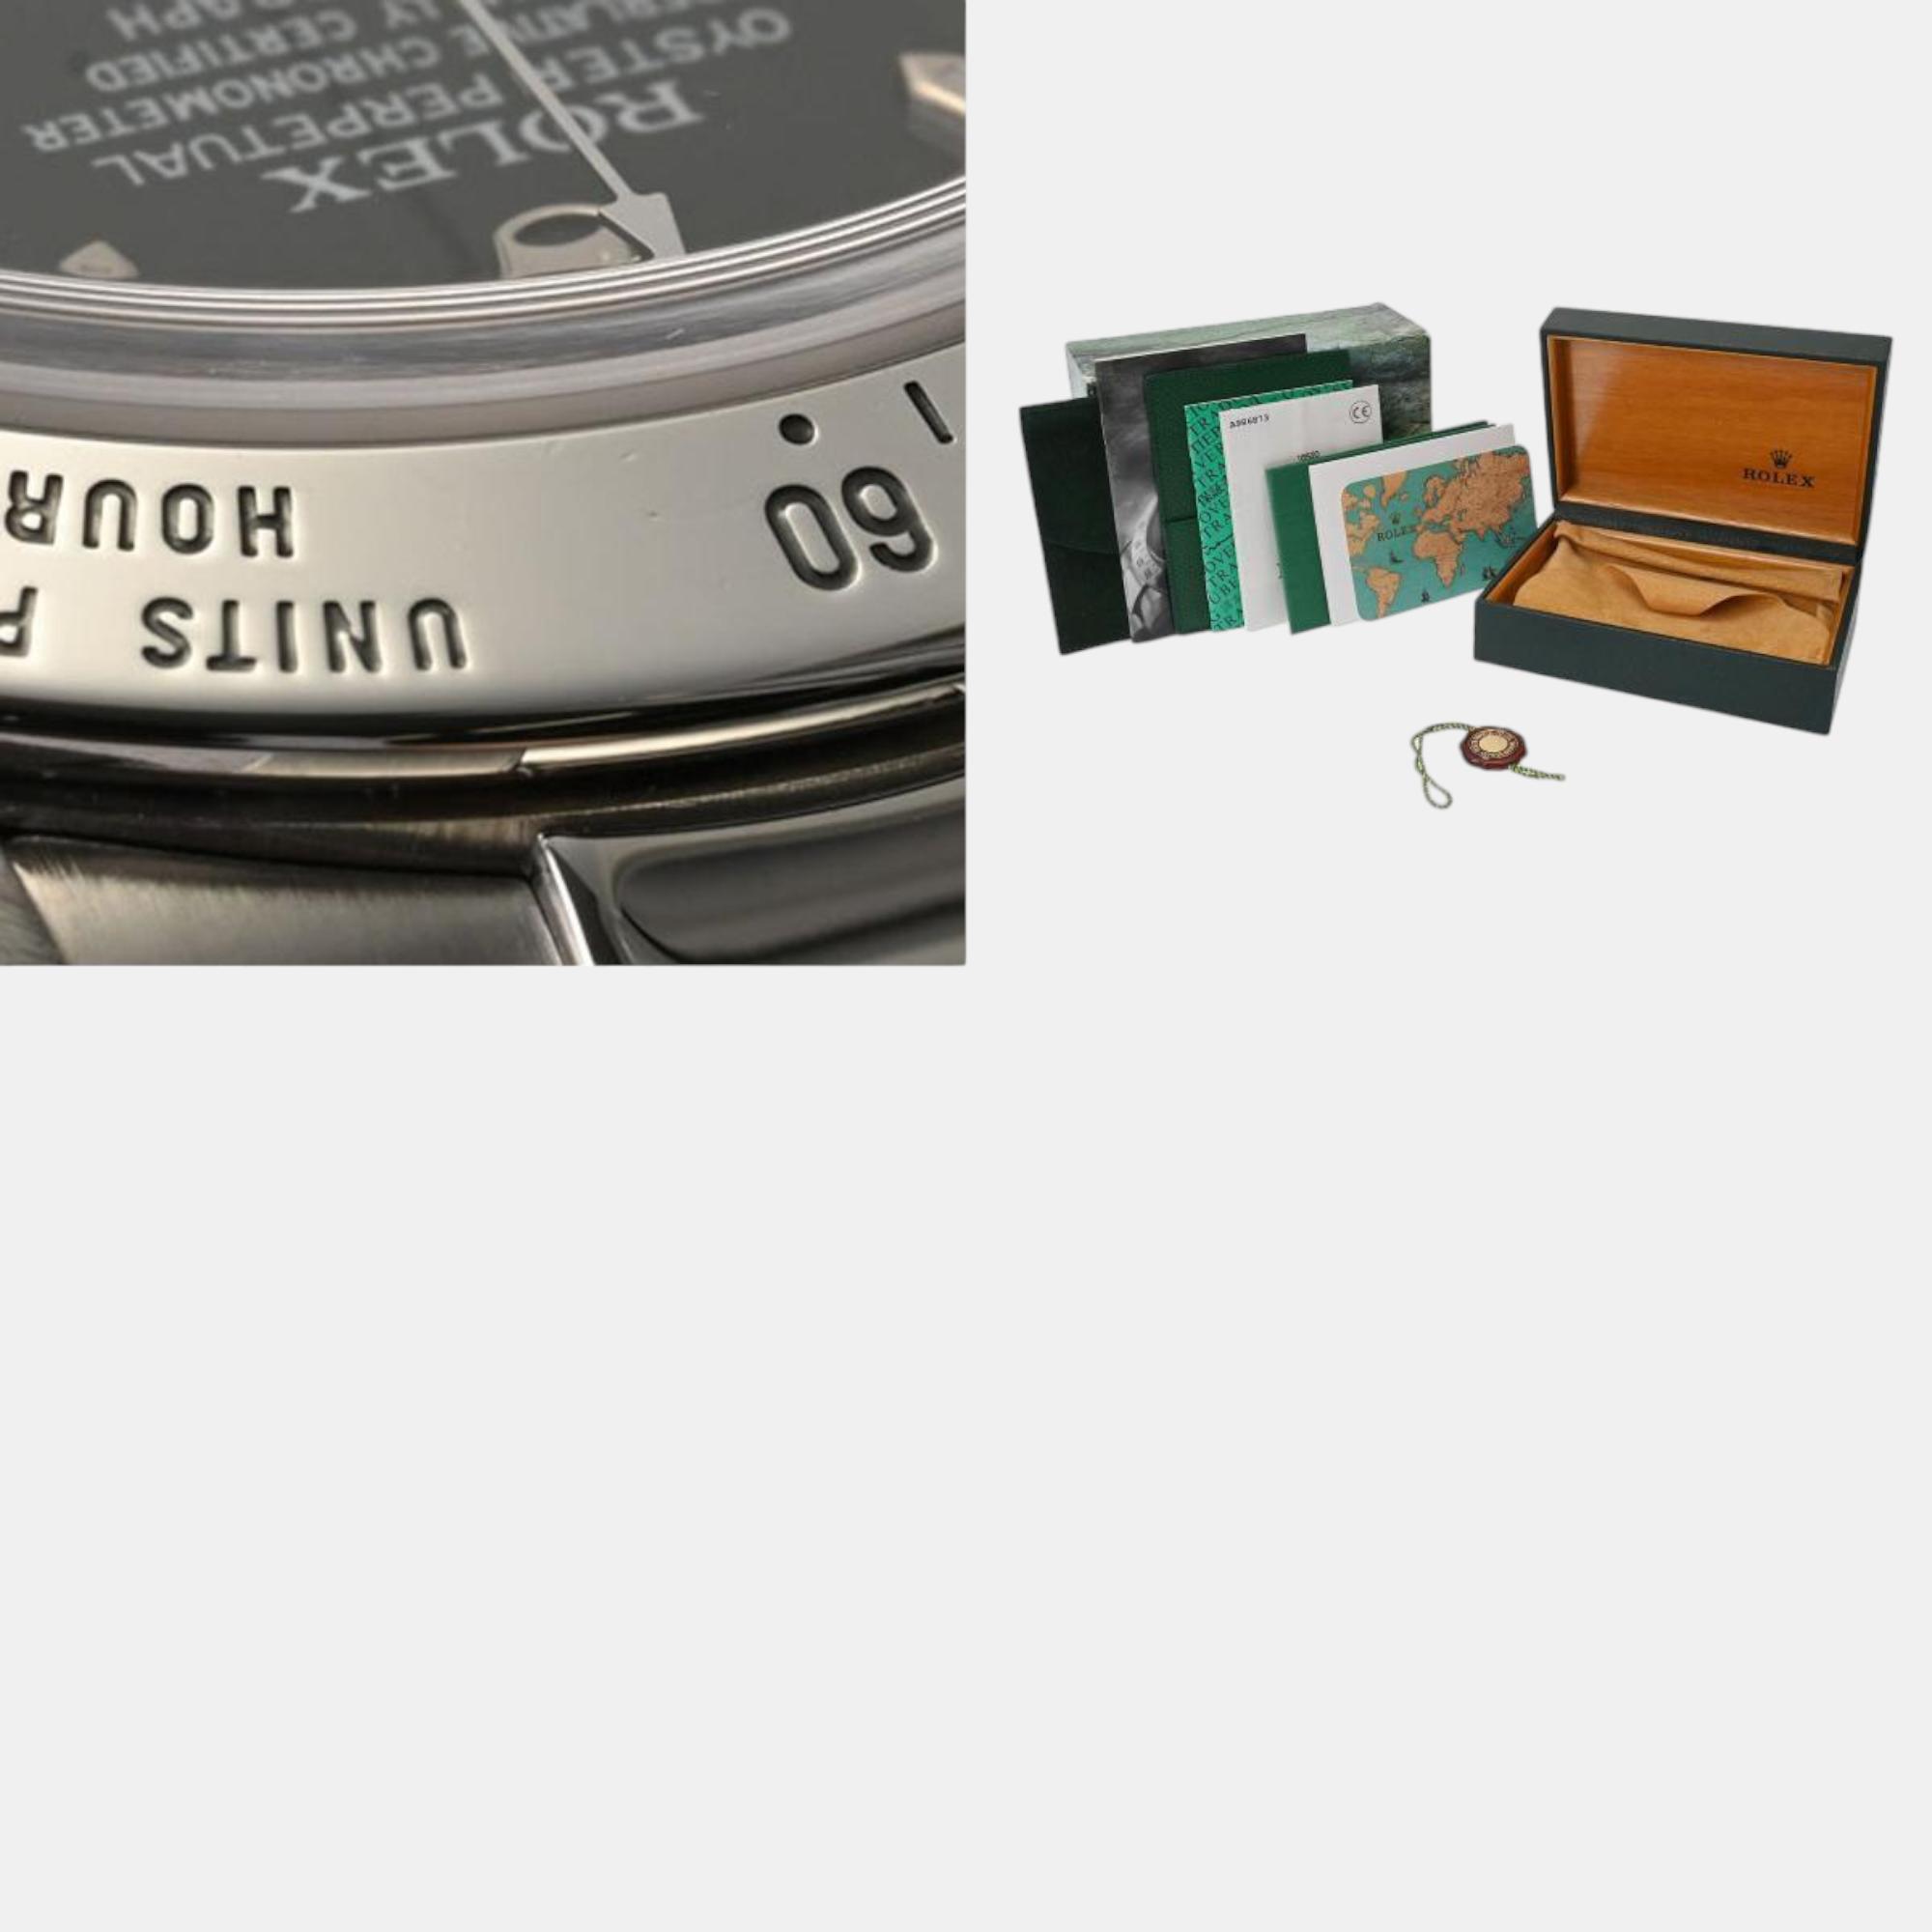 Rolex Black Stainless Steel Cosmograph Daytona 16520 Automatic Men's Wristwatch 40 Mm